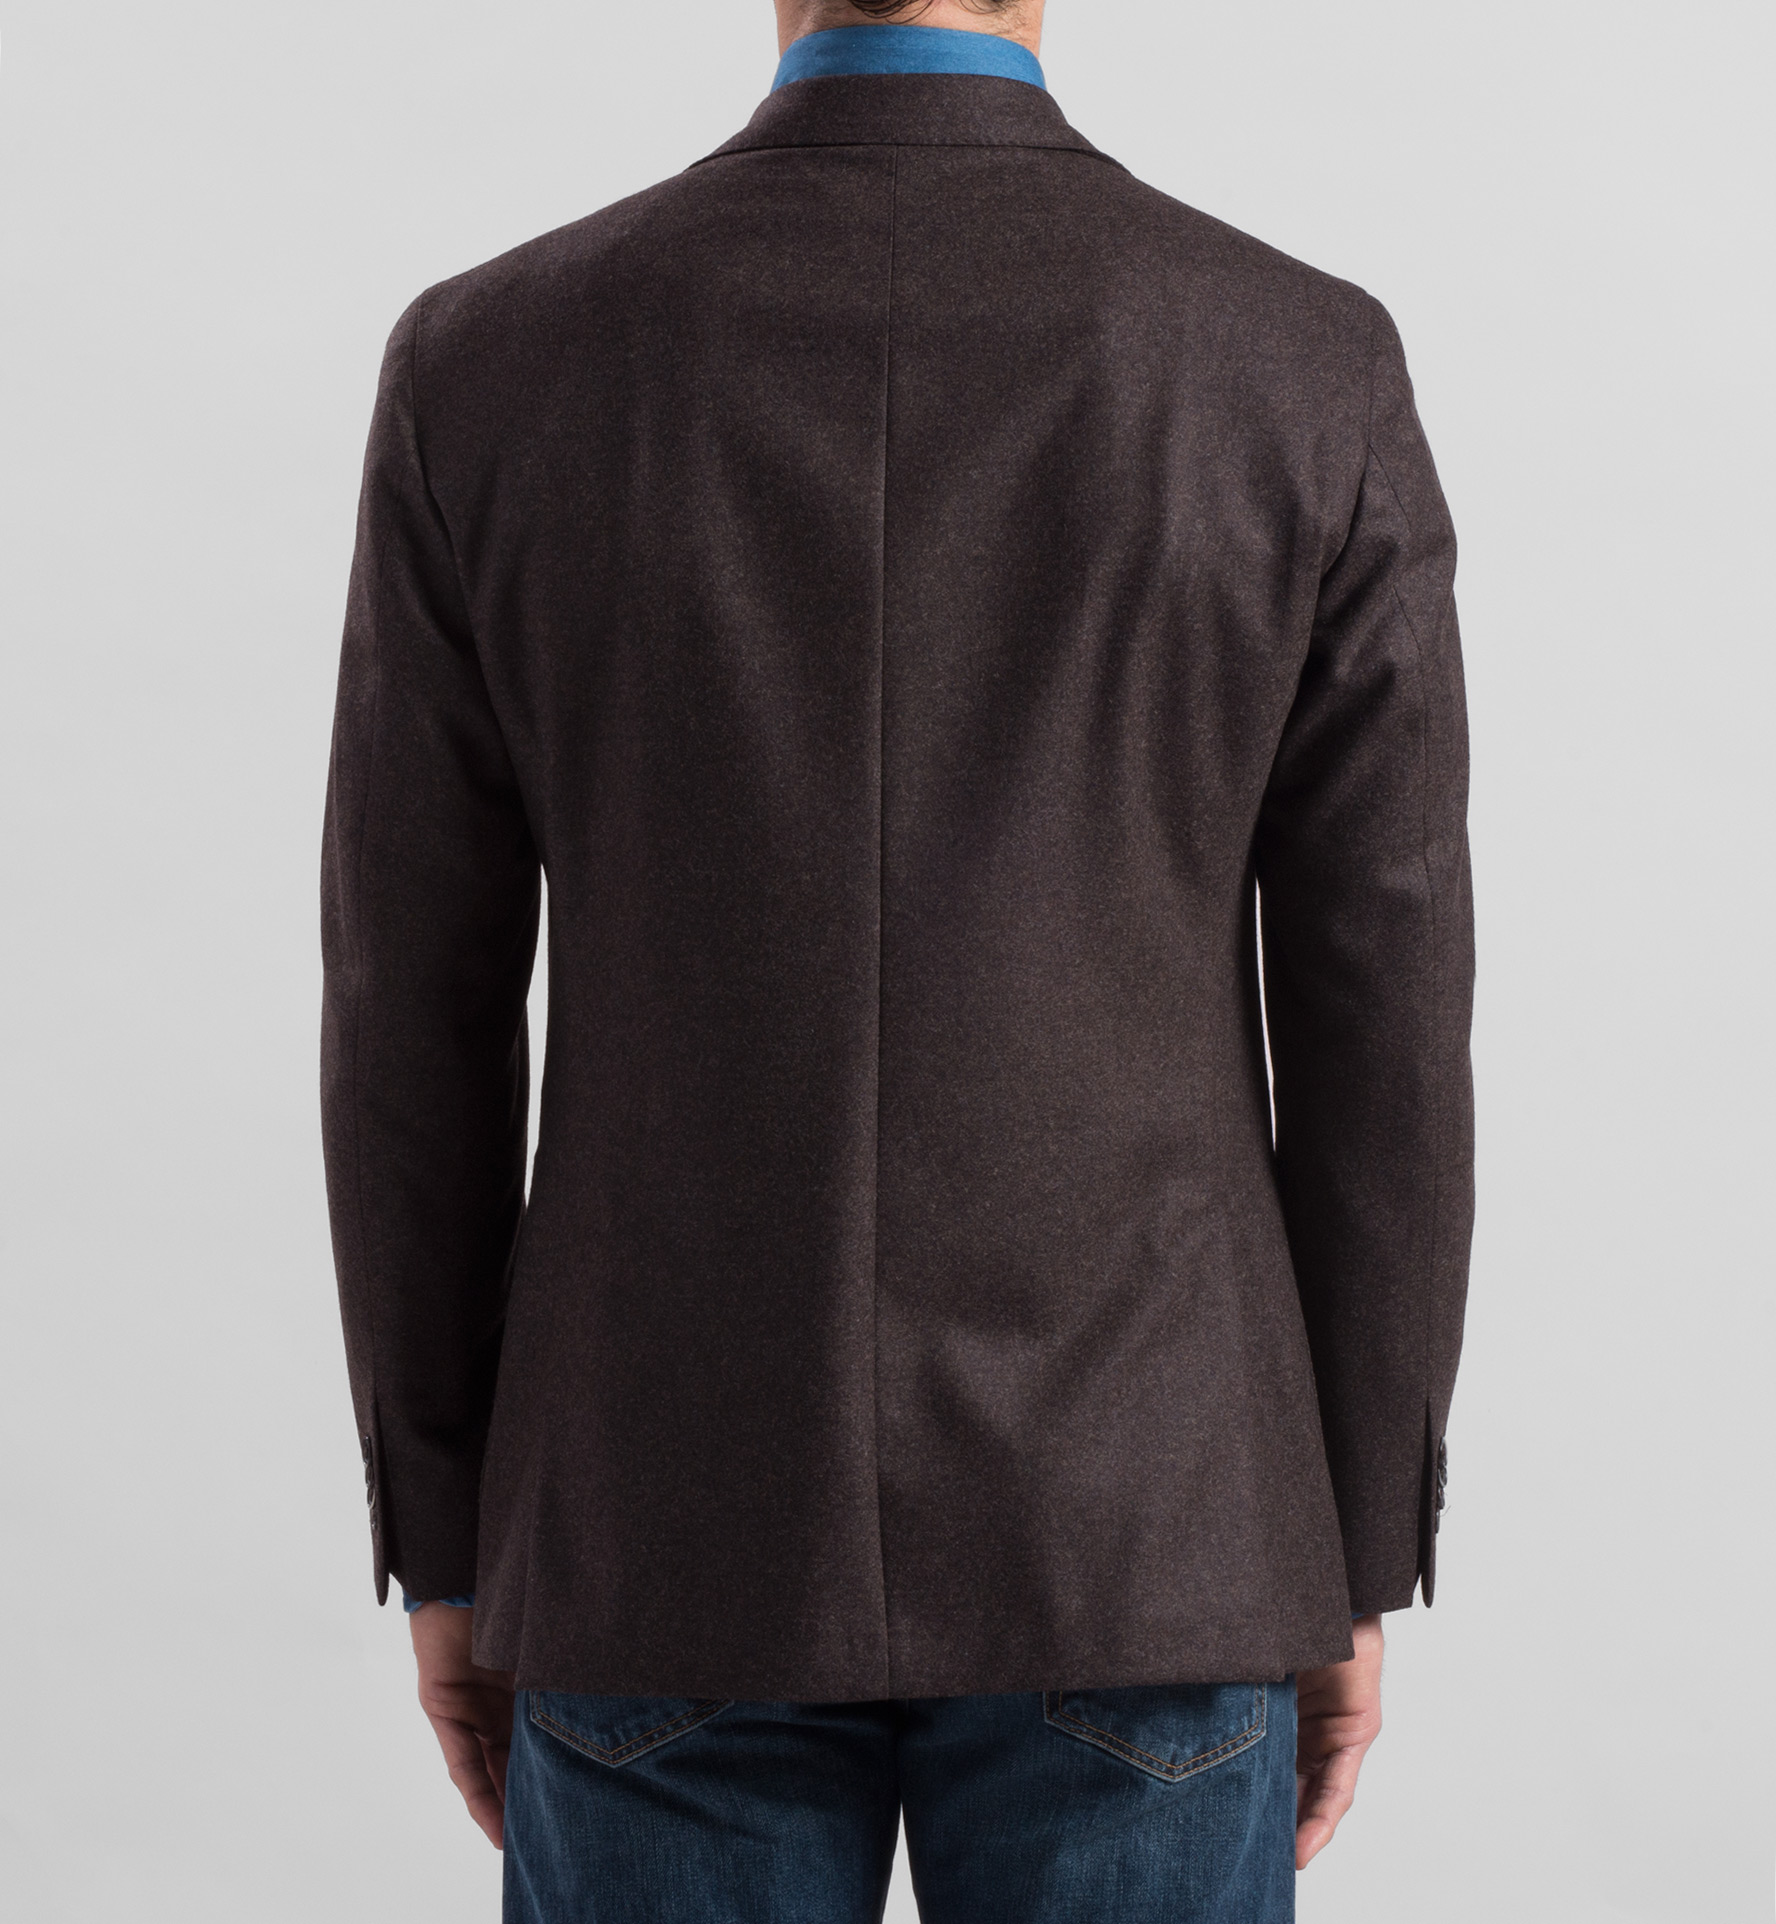 Brown Flannel Genova Jacket by Proper Cloth